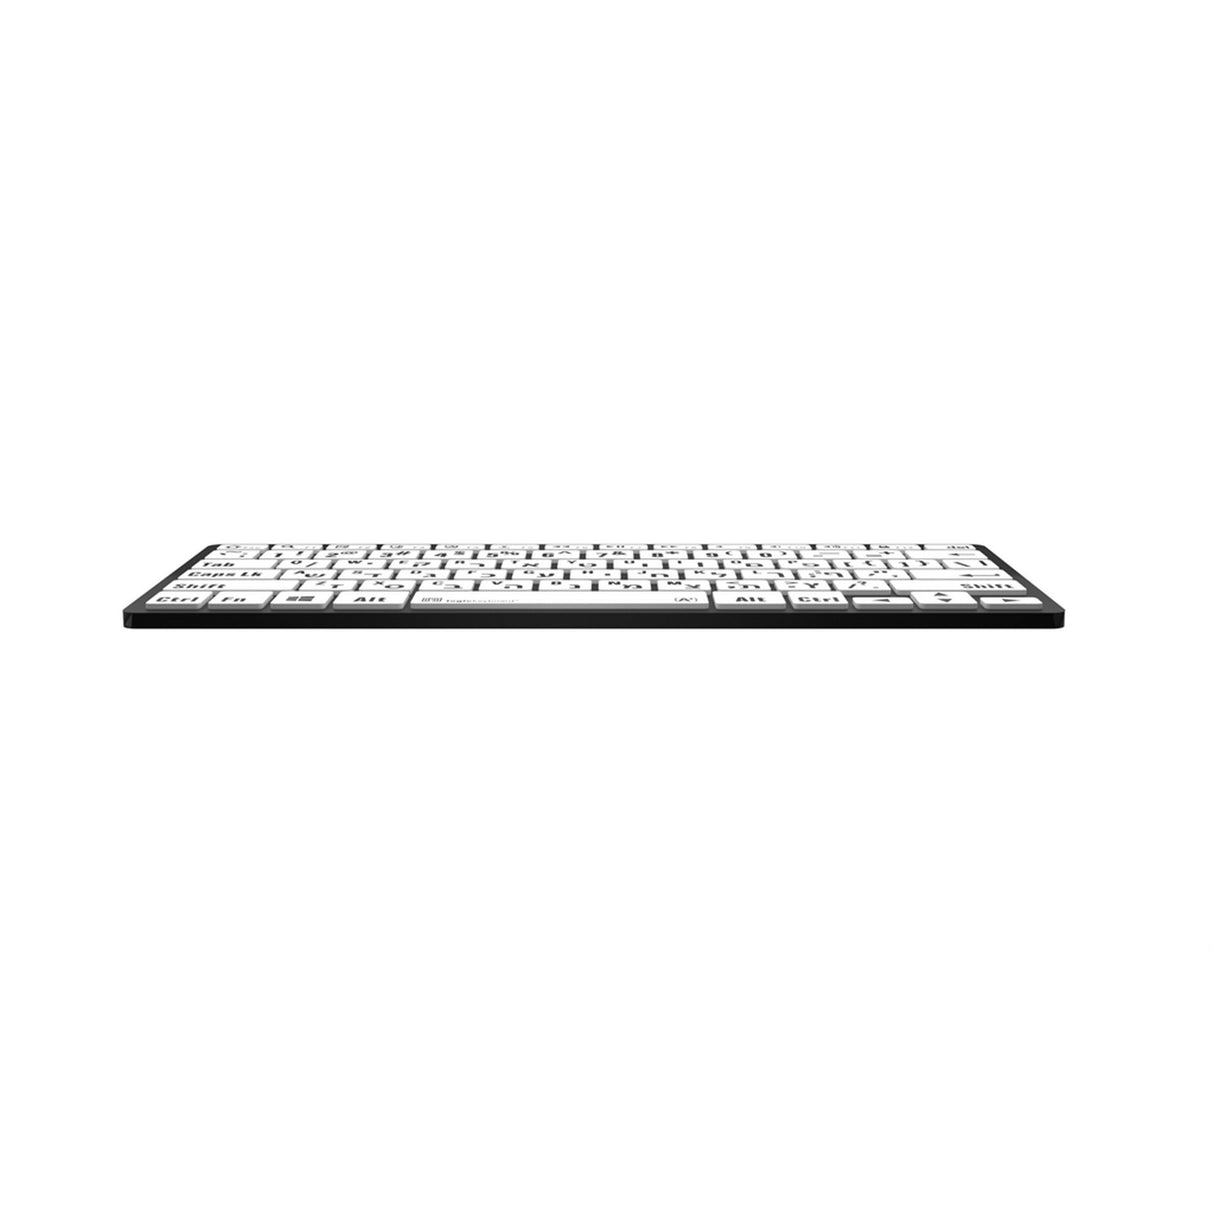 Logickeyboard LKB-LPBW-BTPC-IS LargePrint Black/White PC Bluetooth Mini Keyboard, Hebrew and US English